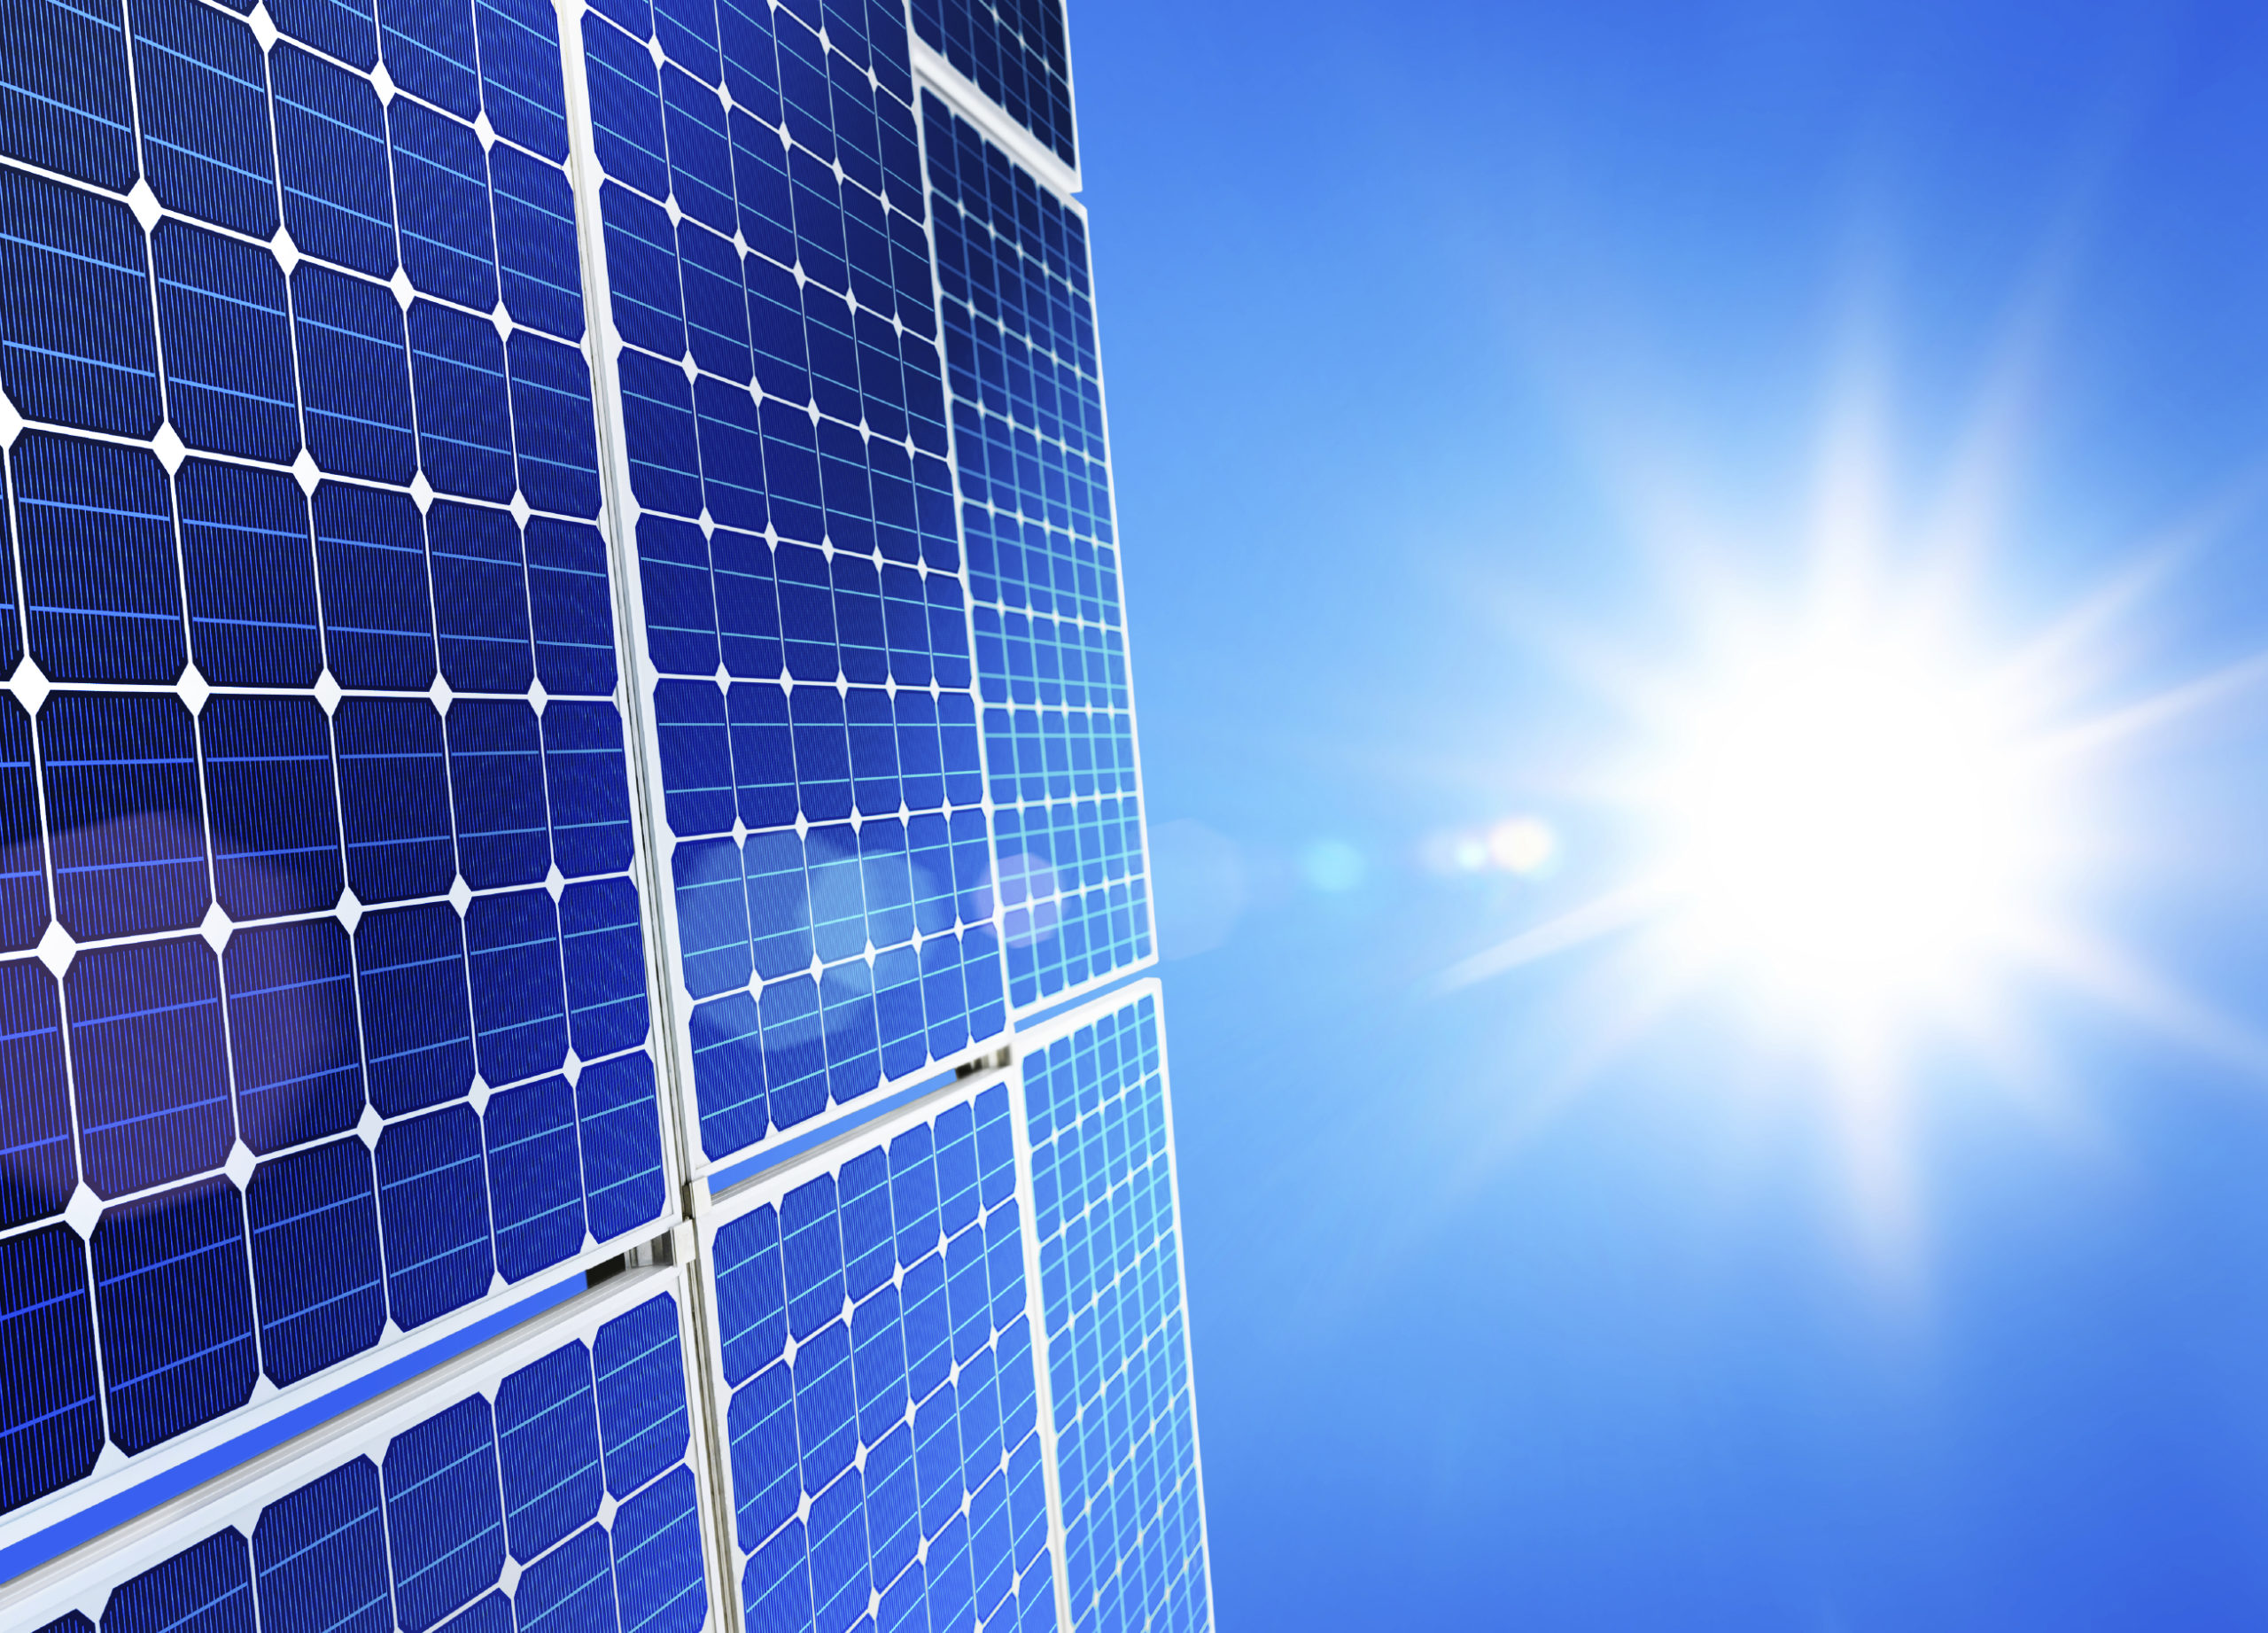 Evergy plans to add solar capacity